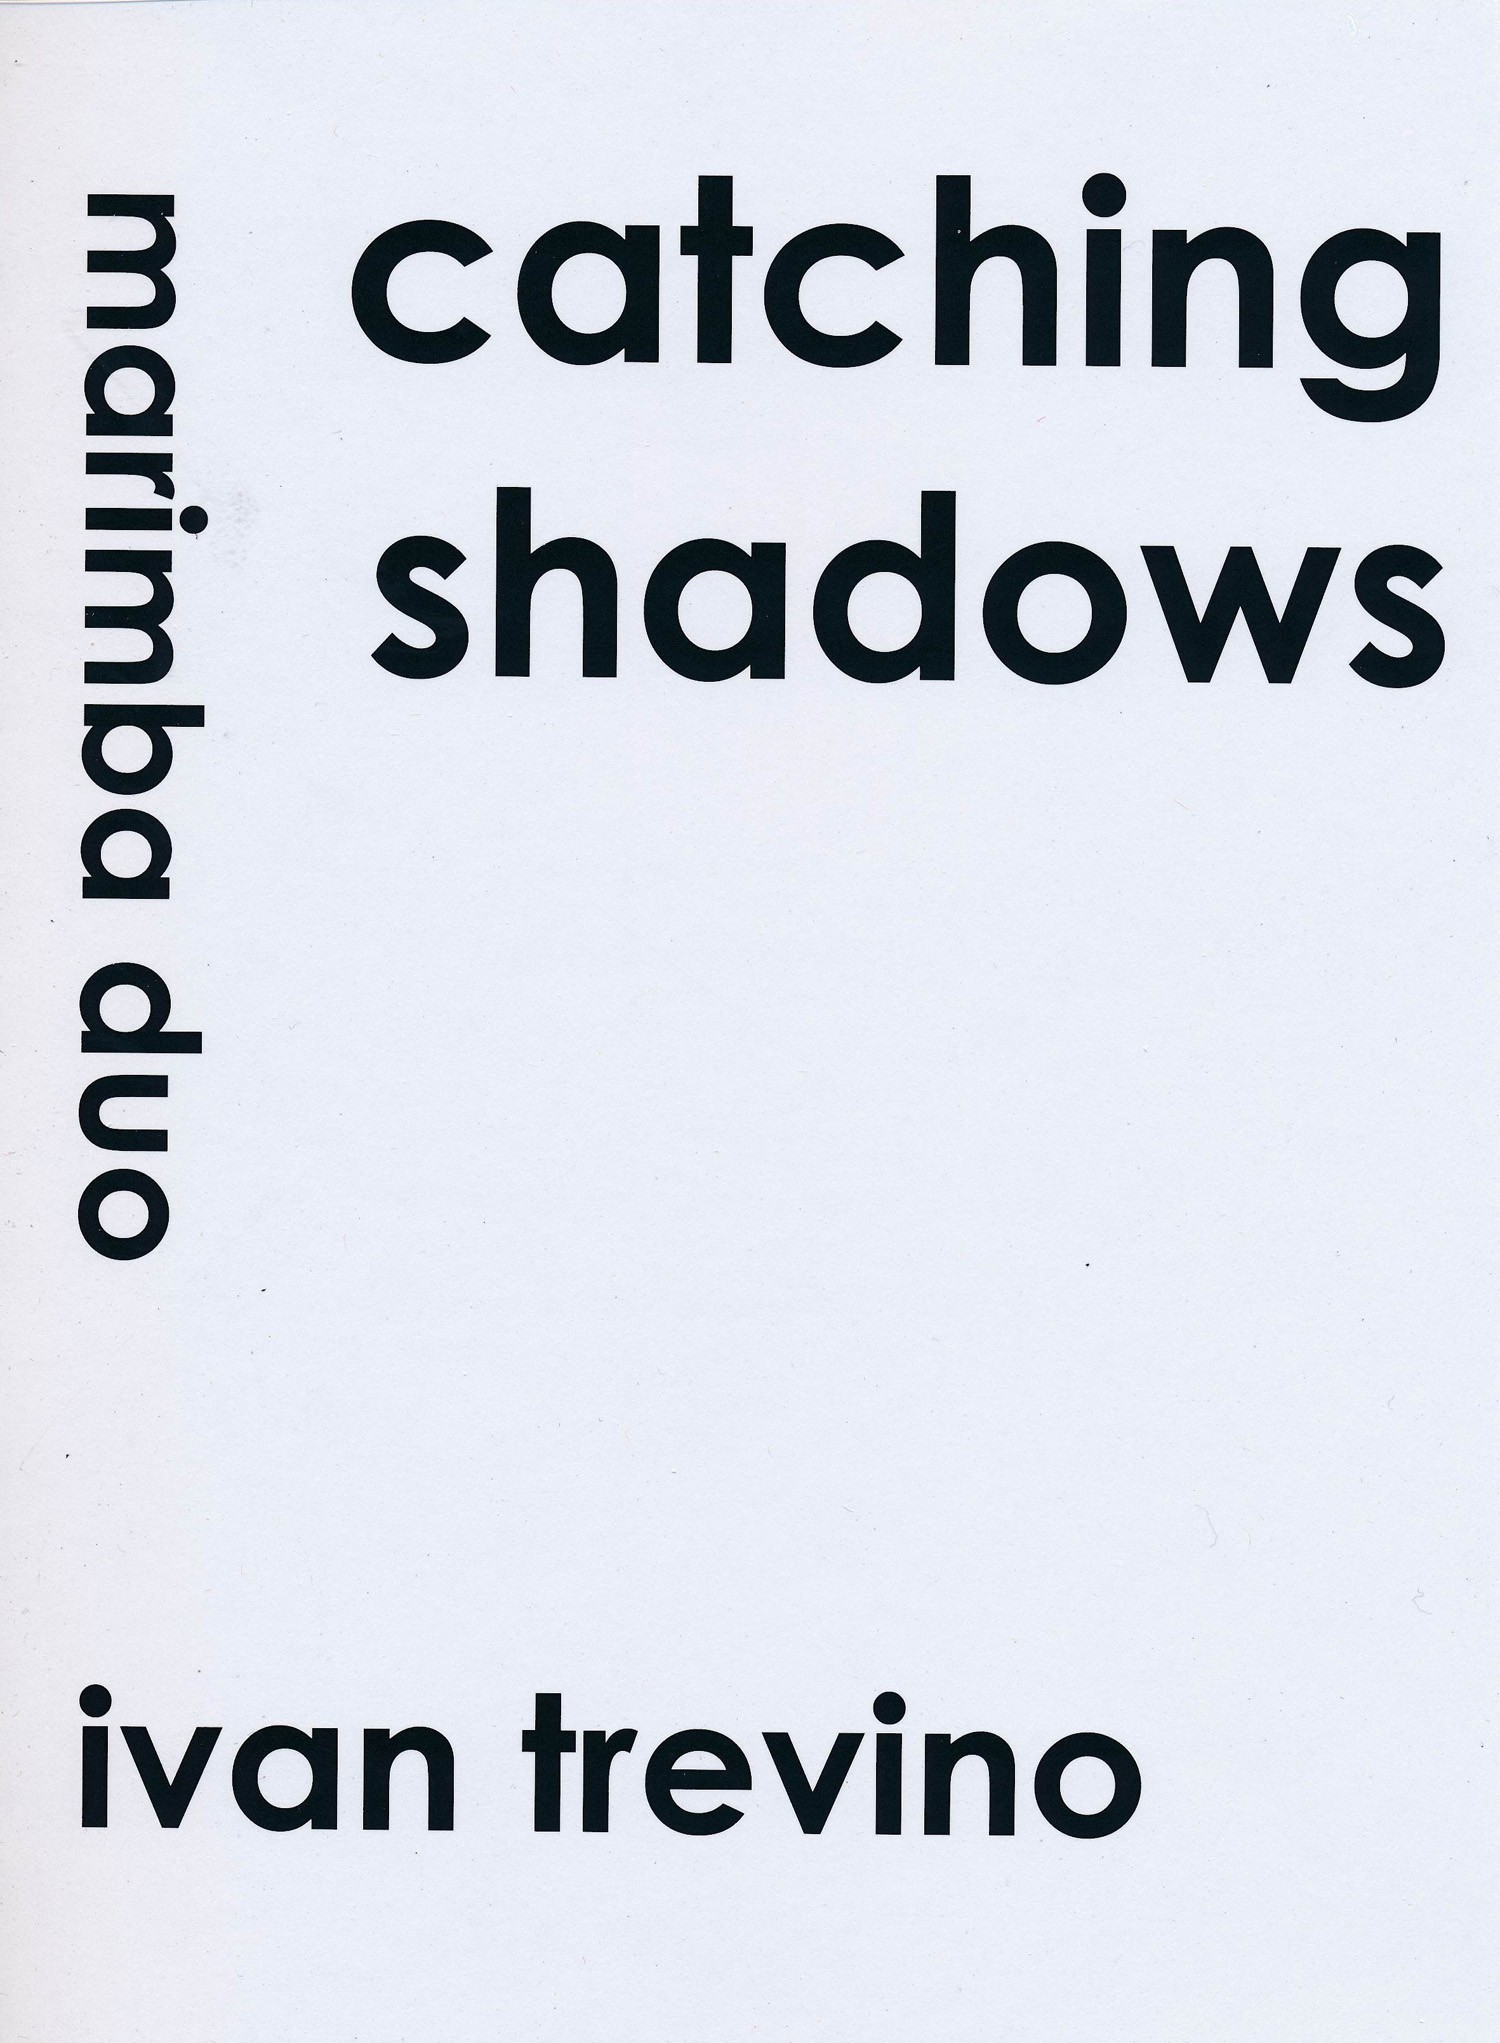 Catching Shadows (ensemble version) by Ivan Trevino